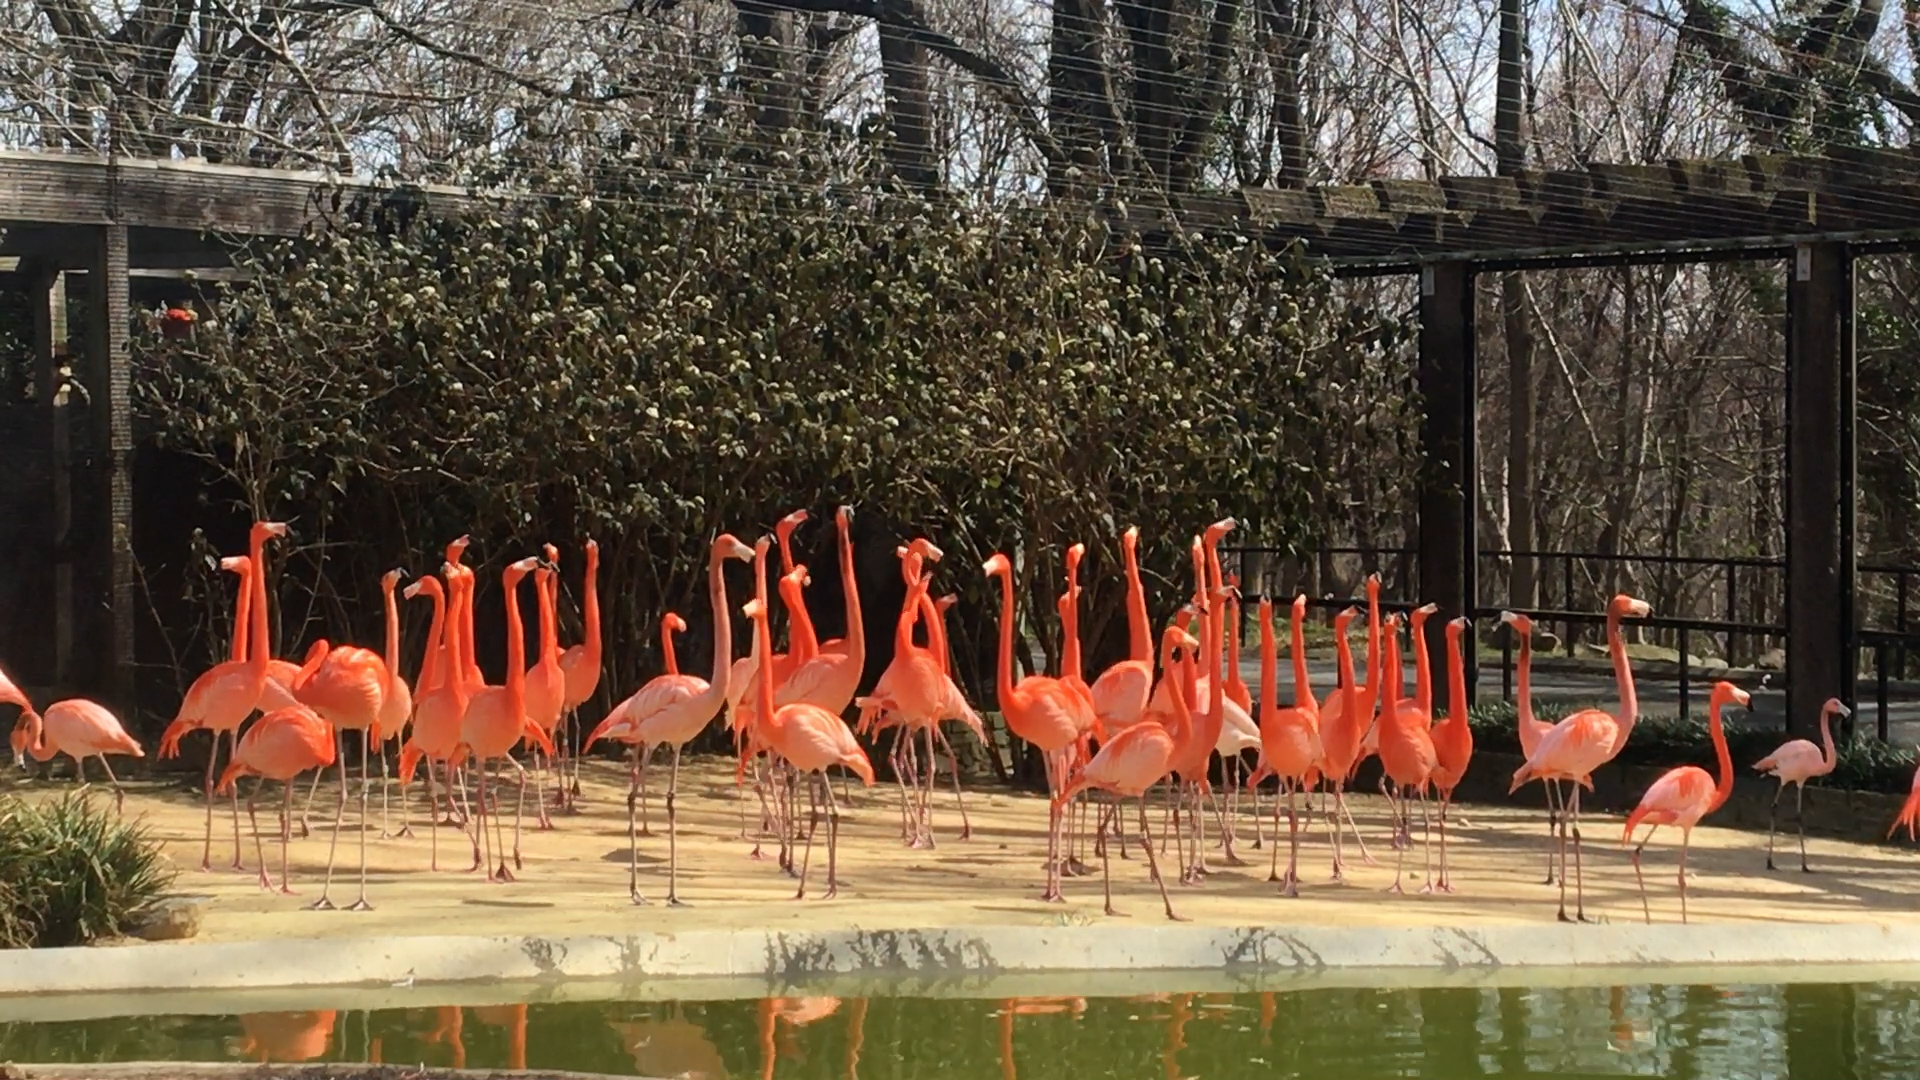 Group of flamingos in outdoor enclosure